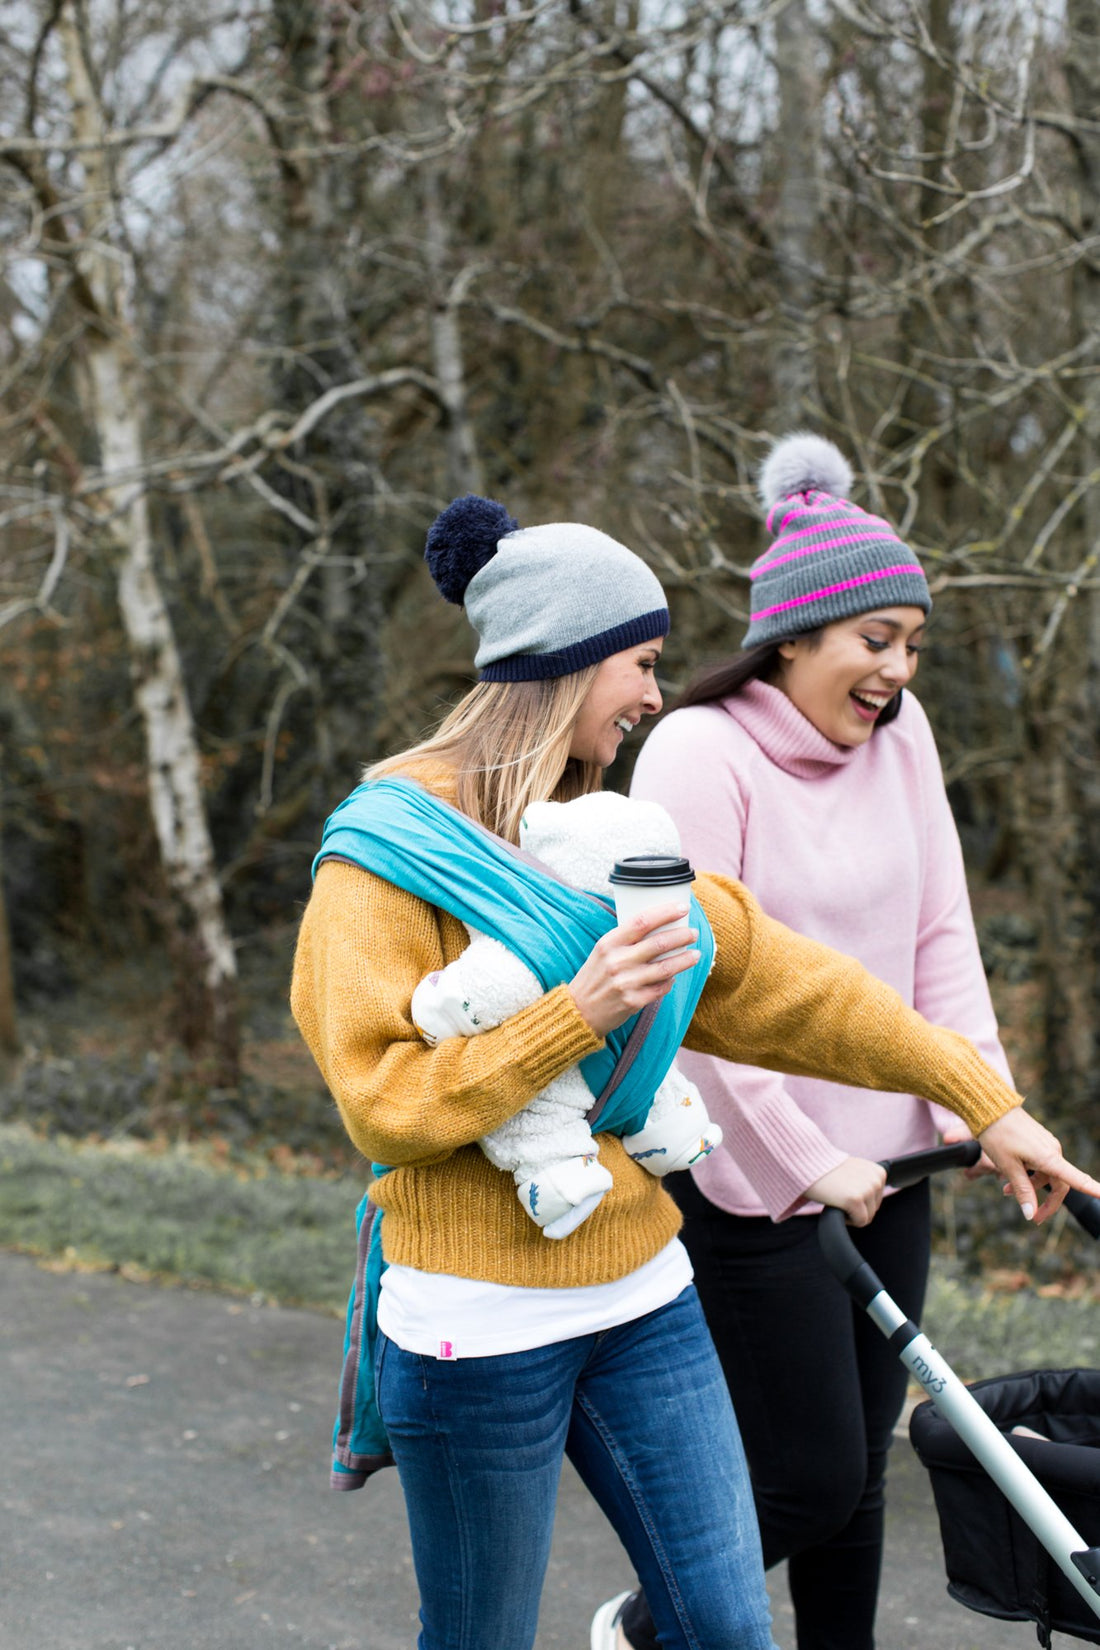 Bshirt Breastfeeding Fashion Edit: A Winter's Walk in the Park